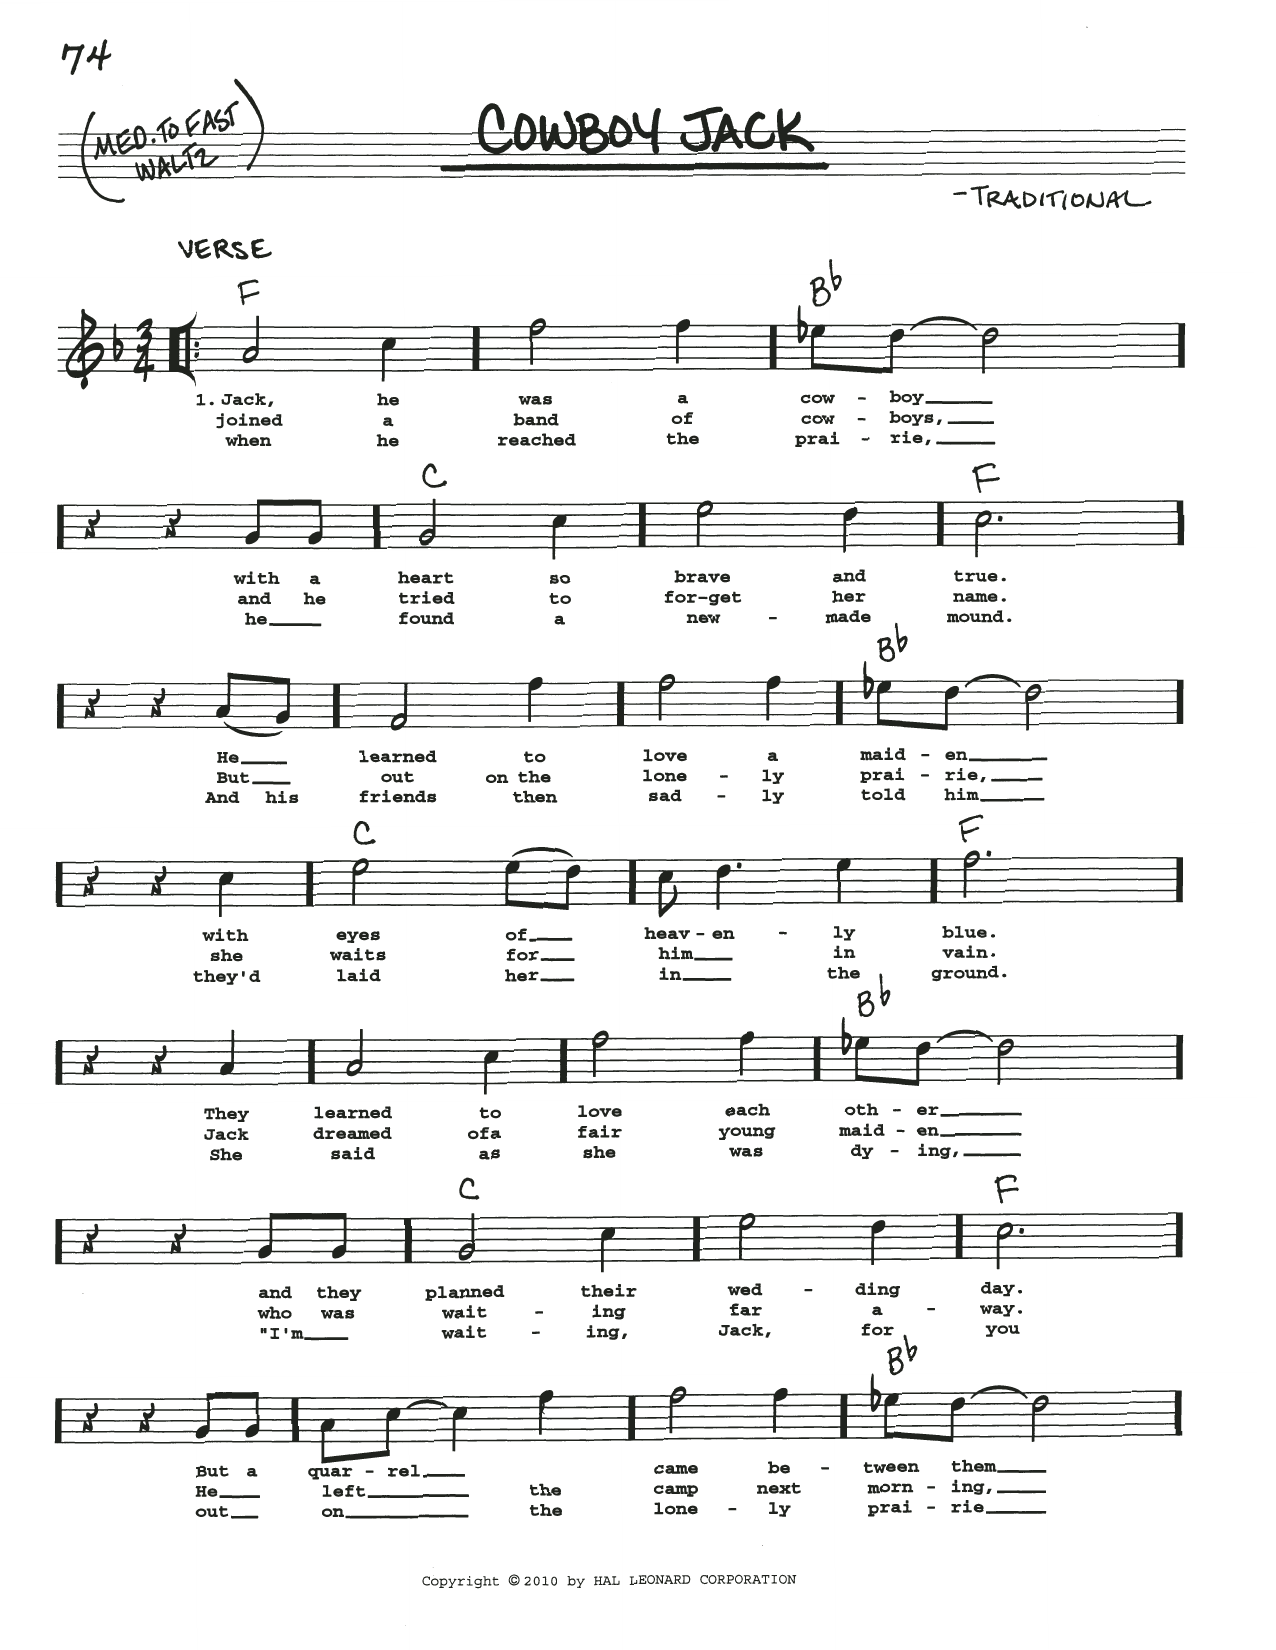 Traditional Cowboy Jack Sheet Music Notes & Chords for Real Book – Melody, Lyrics & Chords - Download or Print PDF